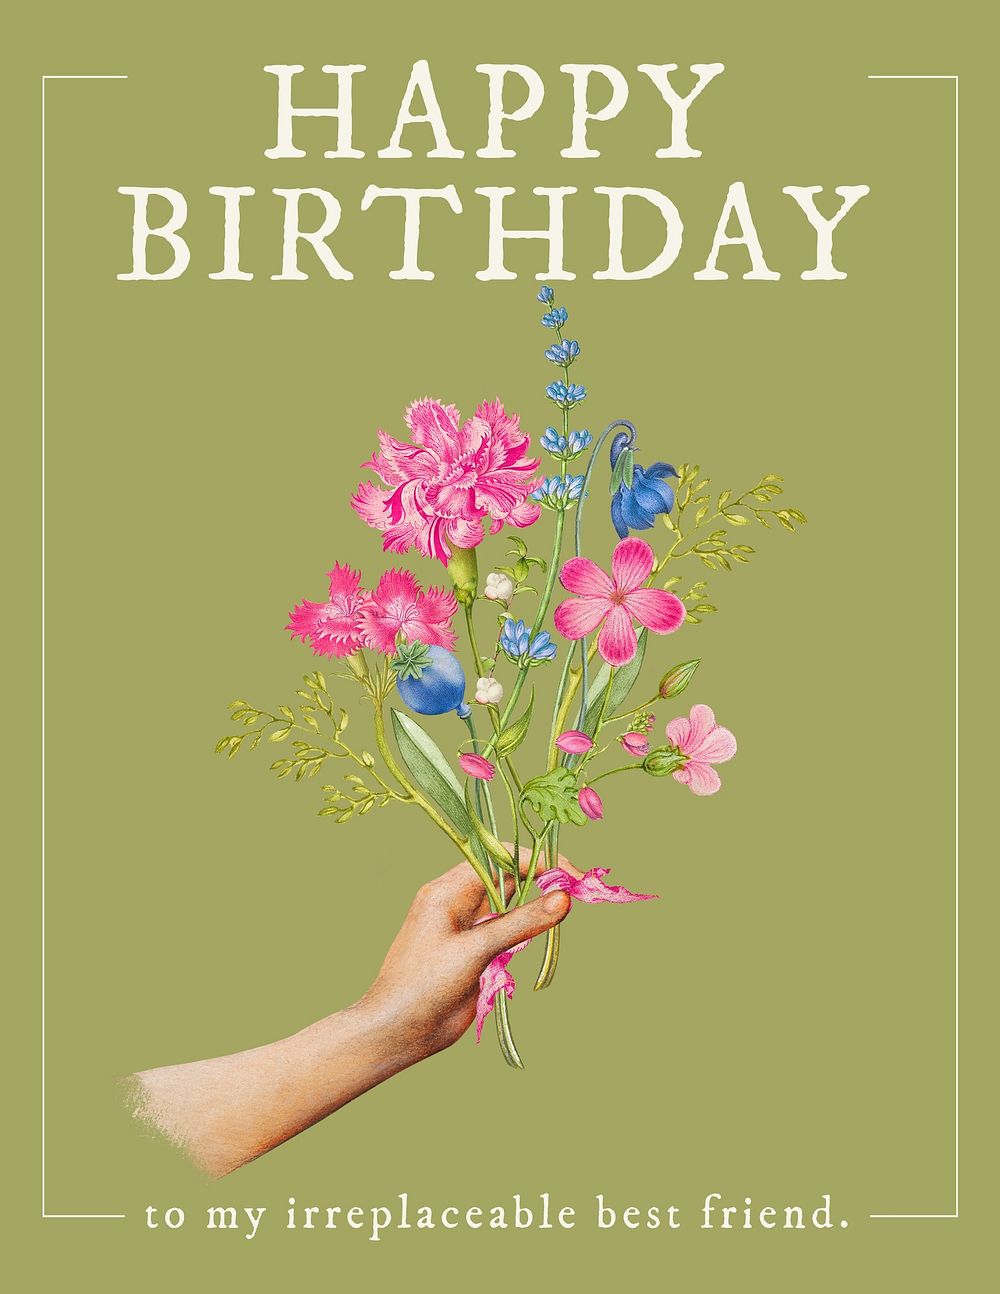 Happy birthday poster template | Free Photo - rawpixel